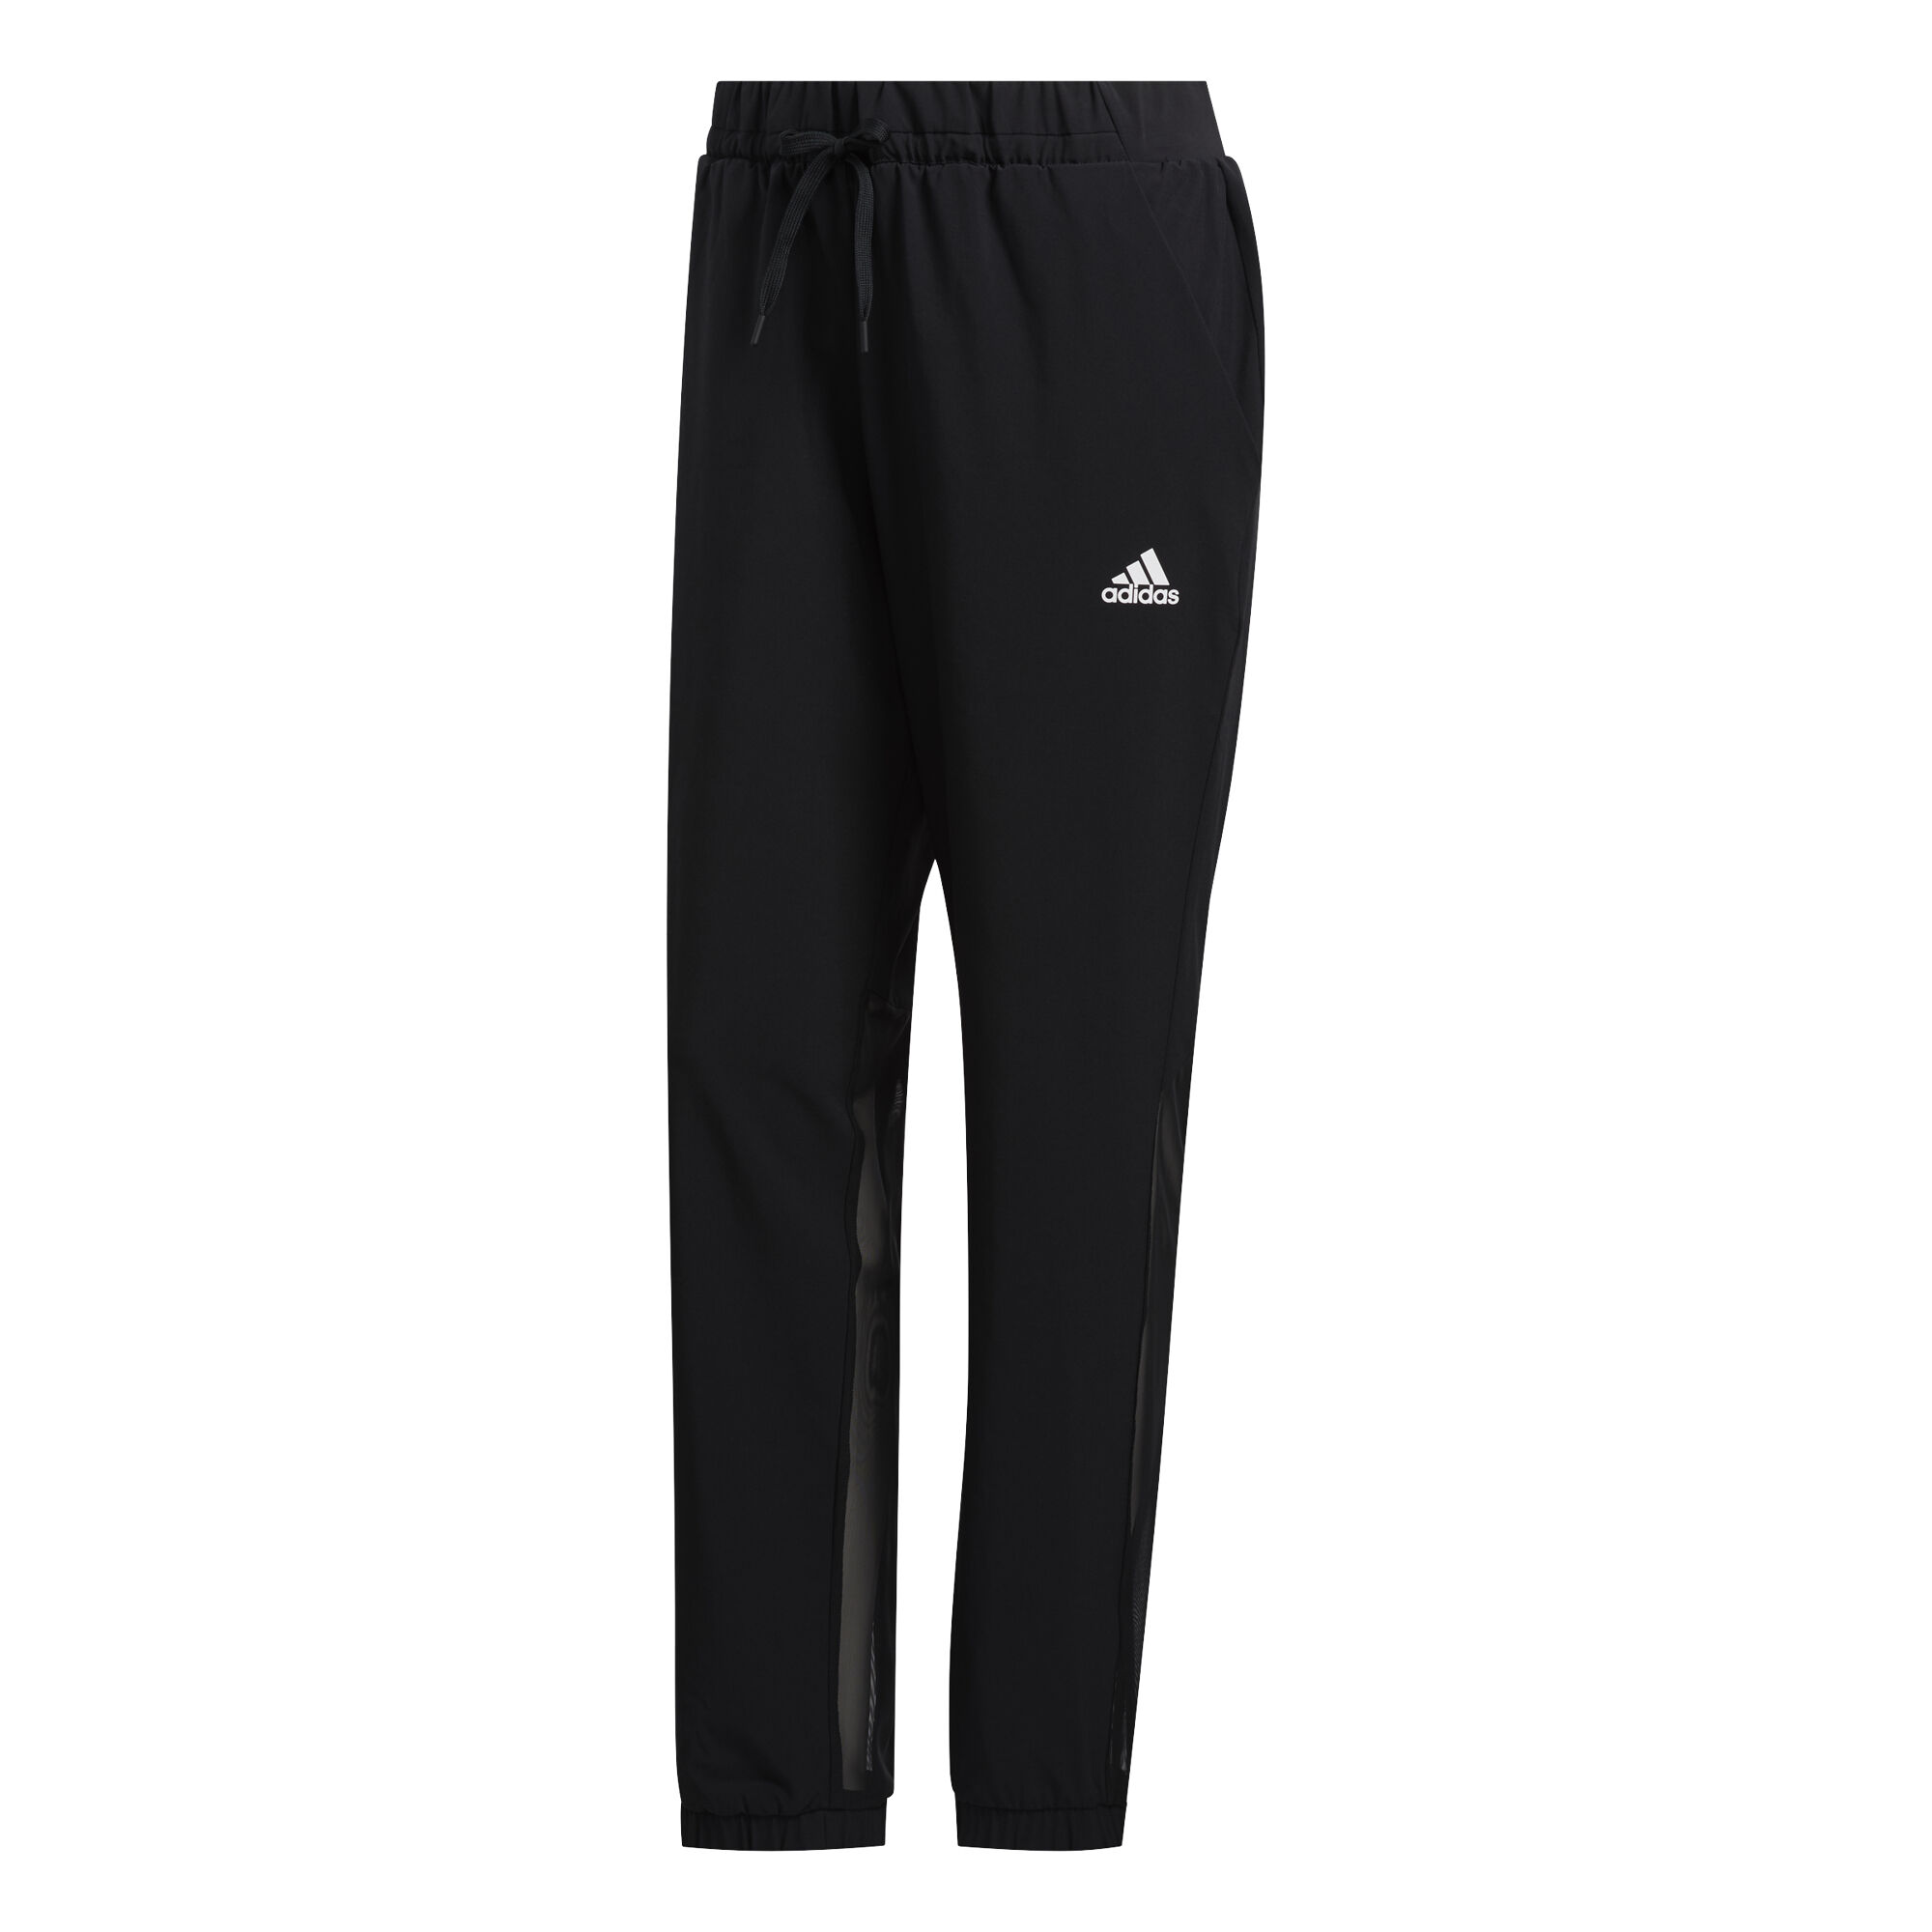 Buy adidas 3-Stripes Woven Training Pants Women Black, White online ...